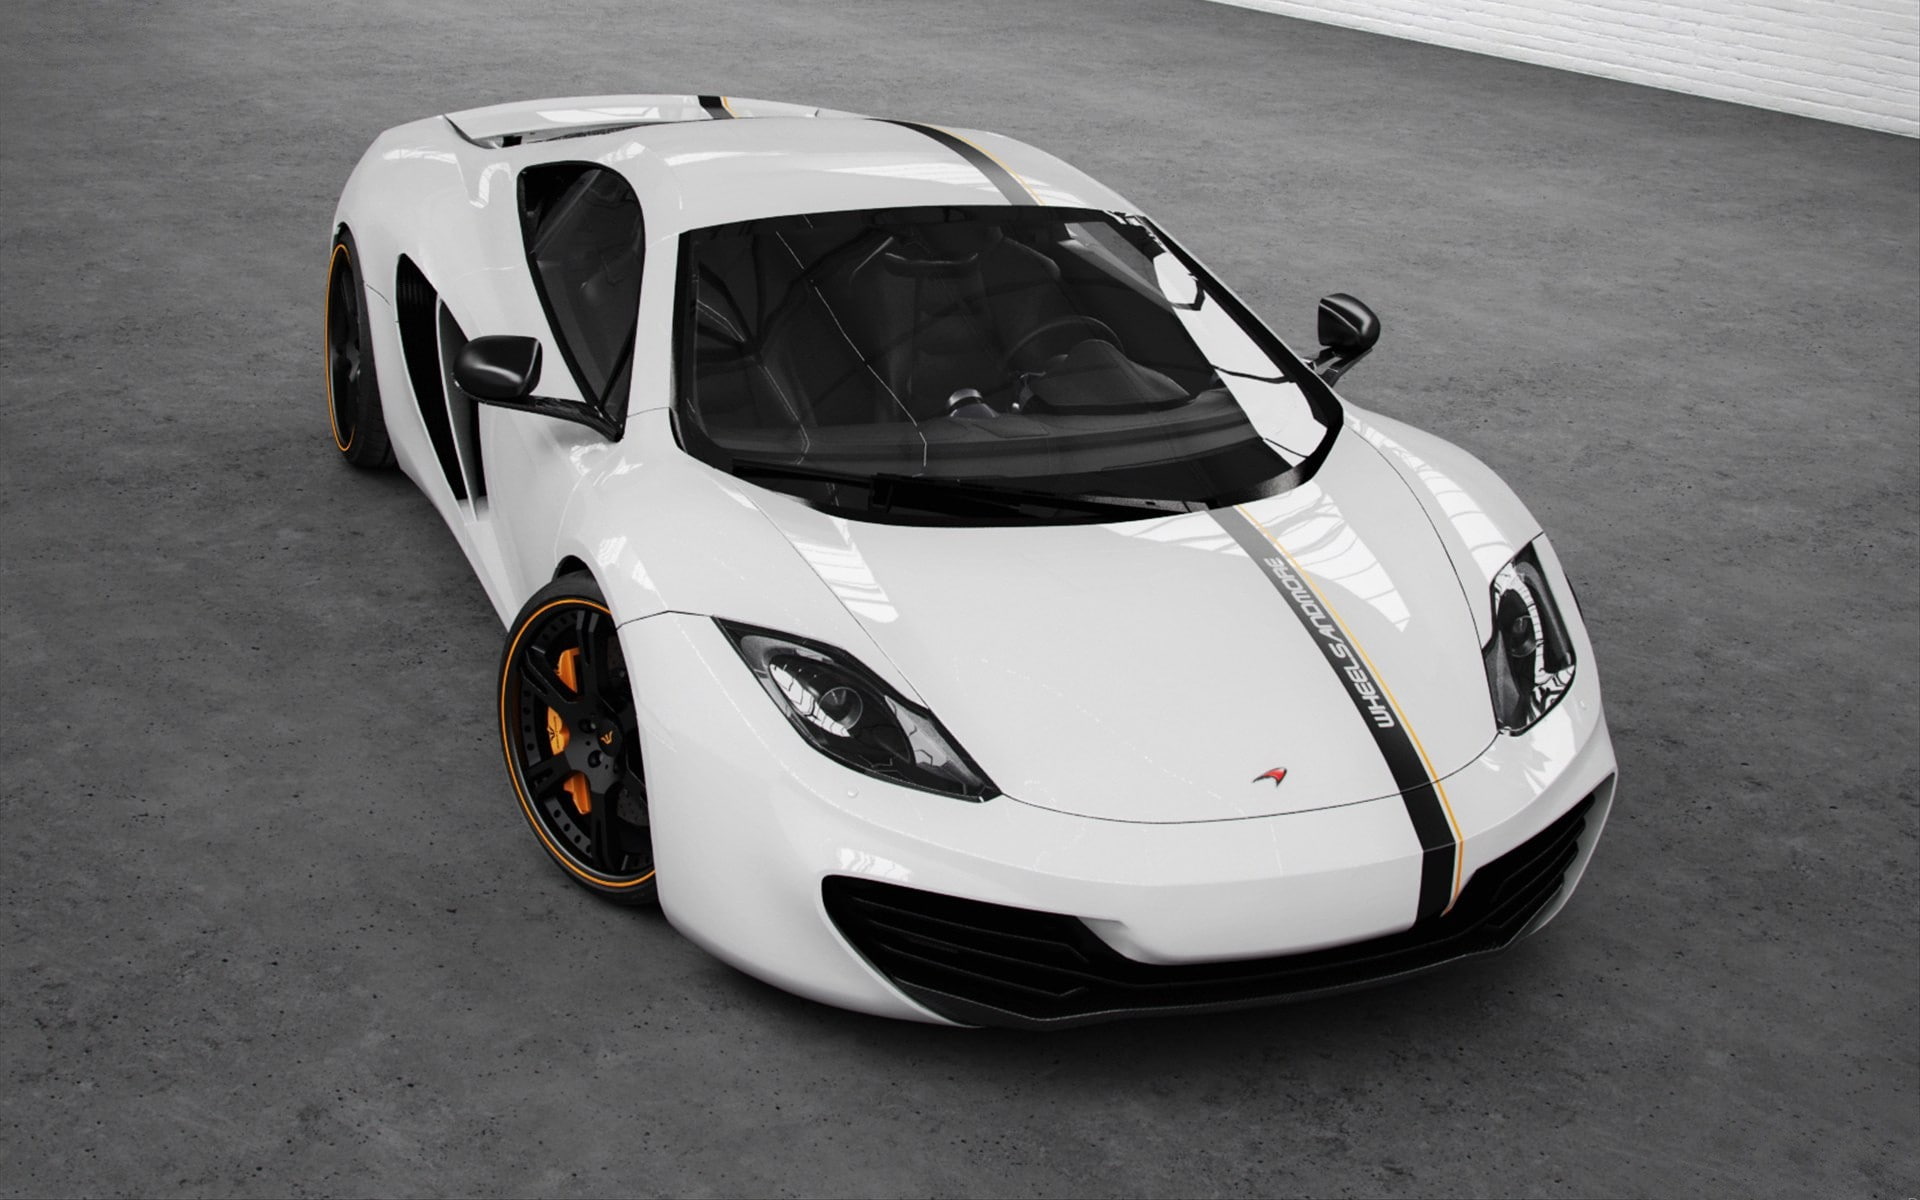 McLaren MP4-12C HD, white and black ferrari sports coupe, cars